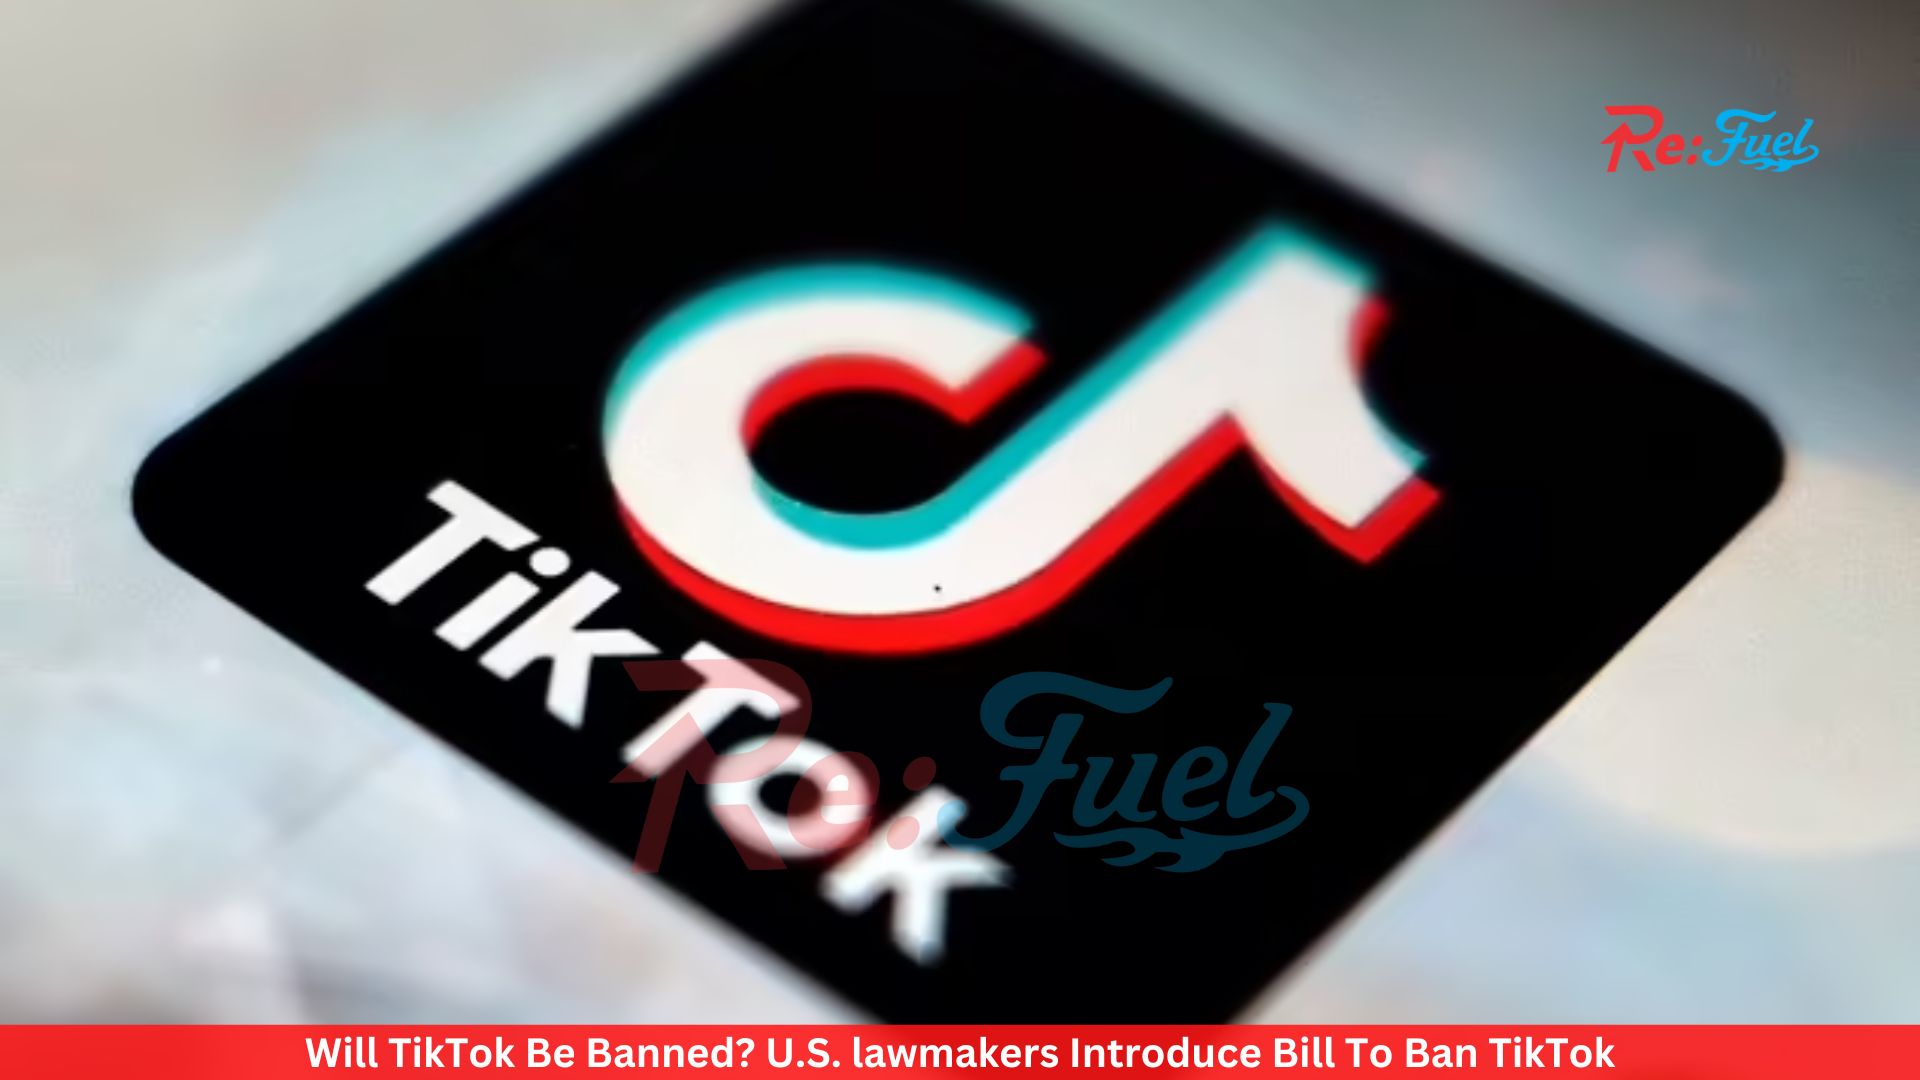 Will TikTok Be Banned? U.S. lawmakers Introduce Bill To Ban TikTok